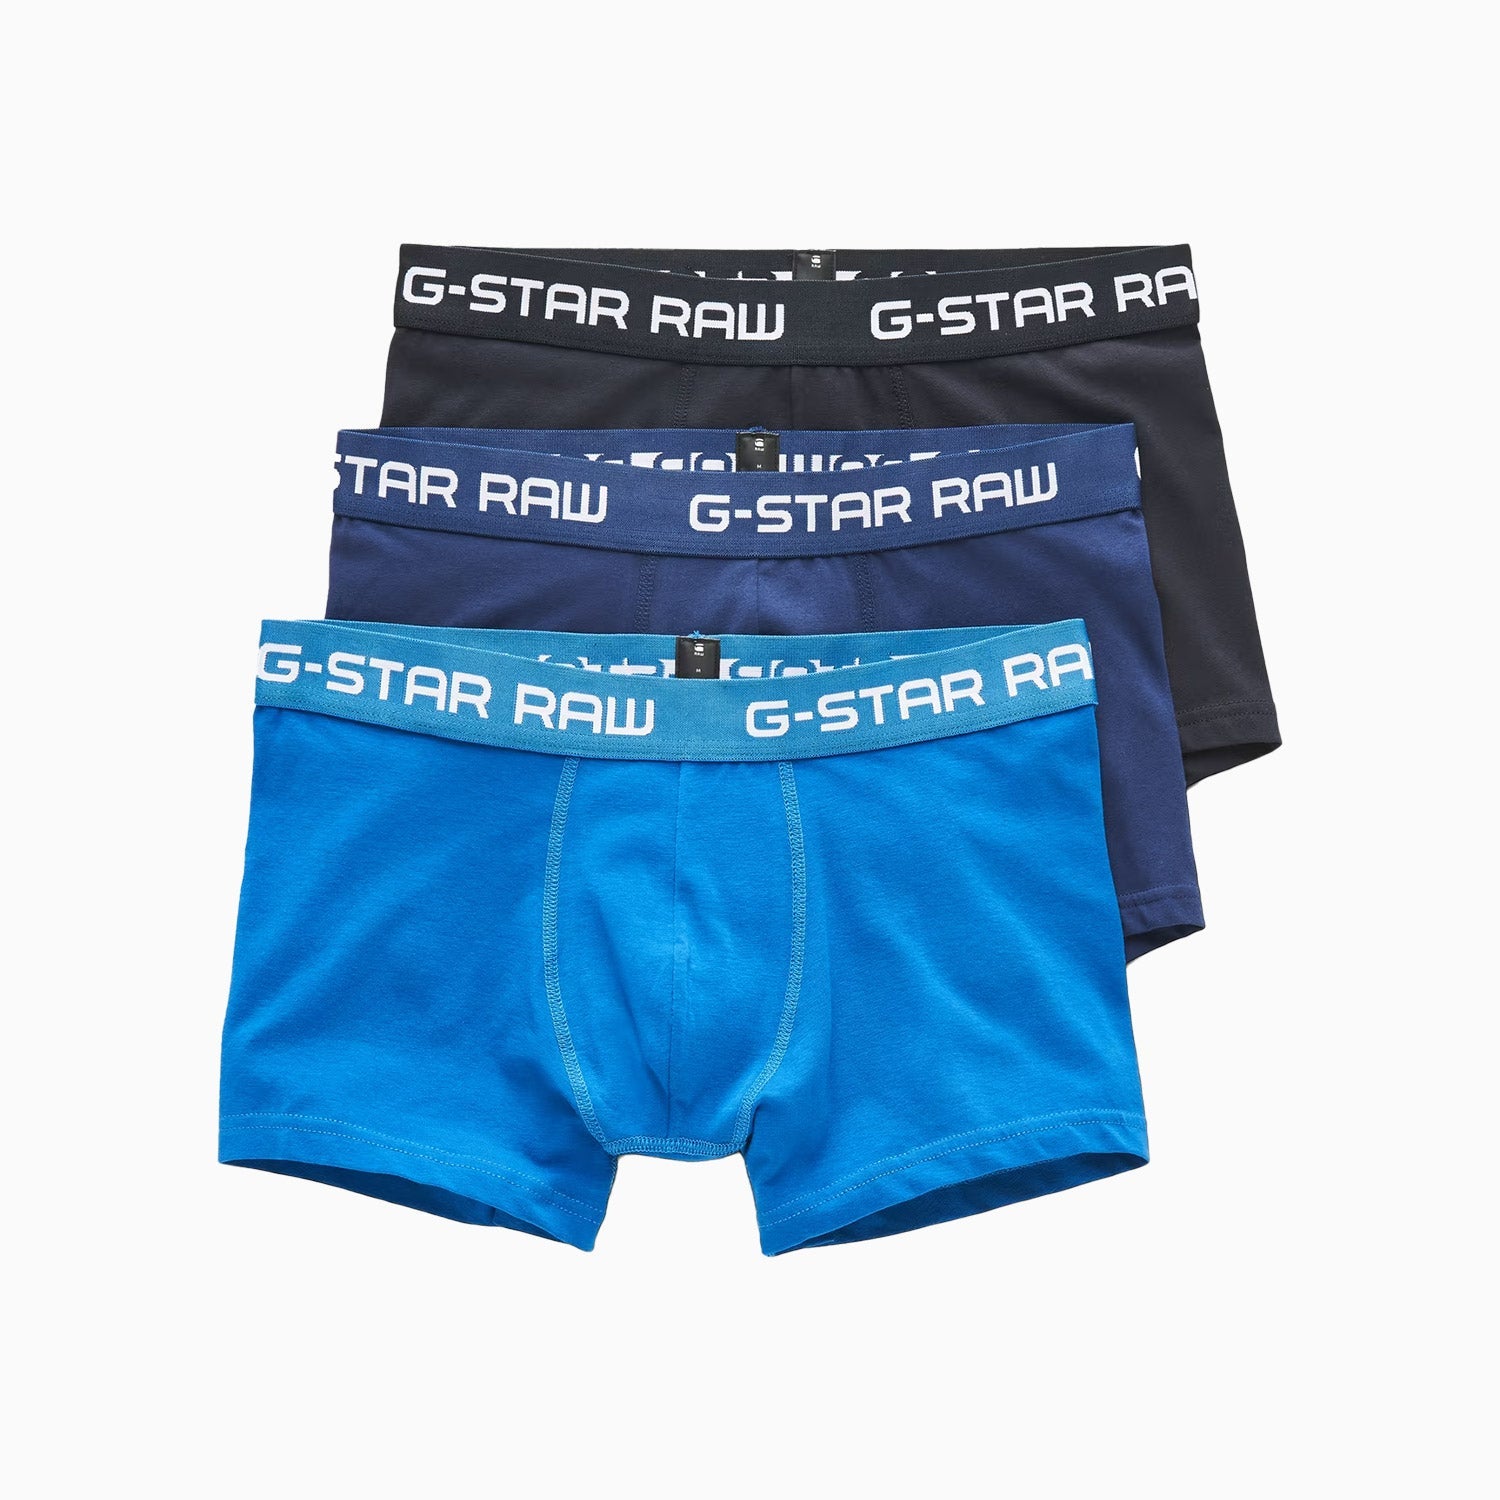 G-Star Raw Men's Classic Trunk 3 Pack